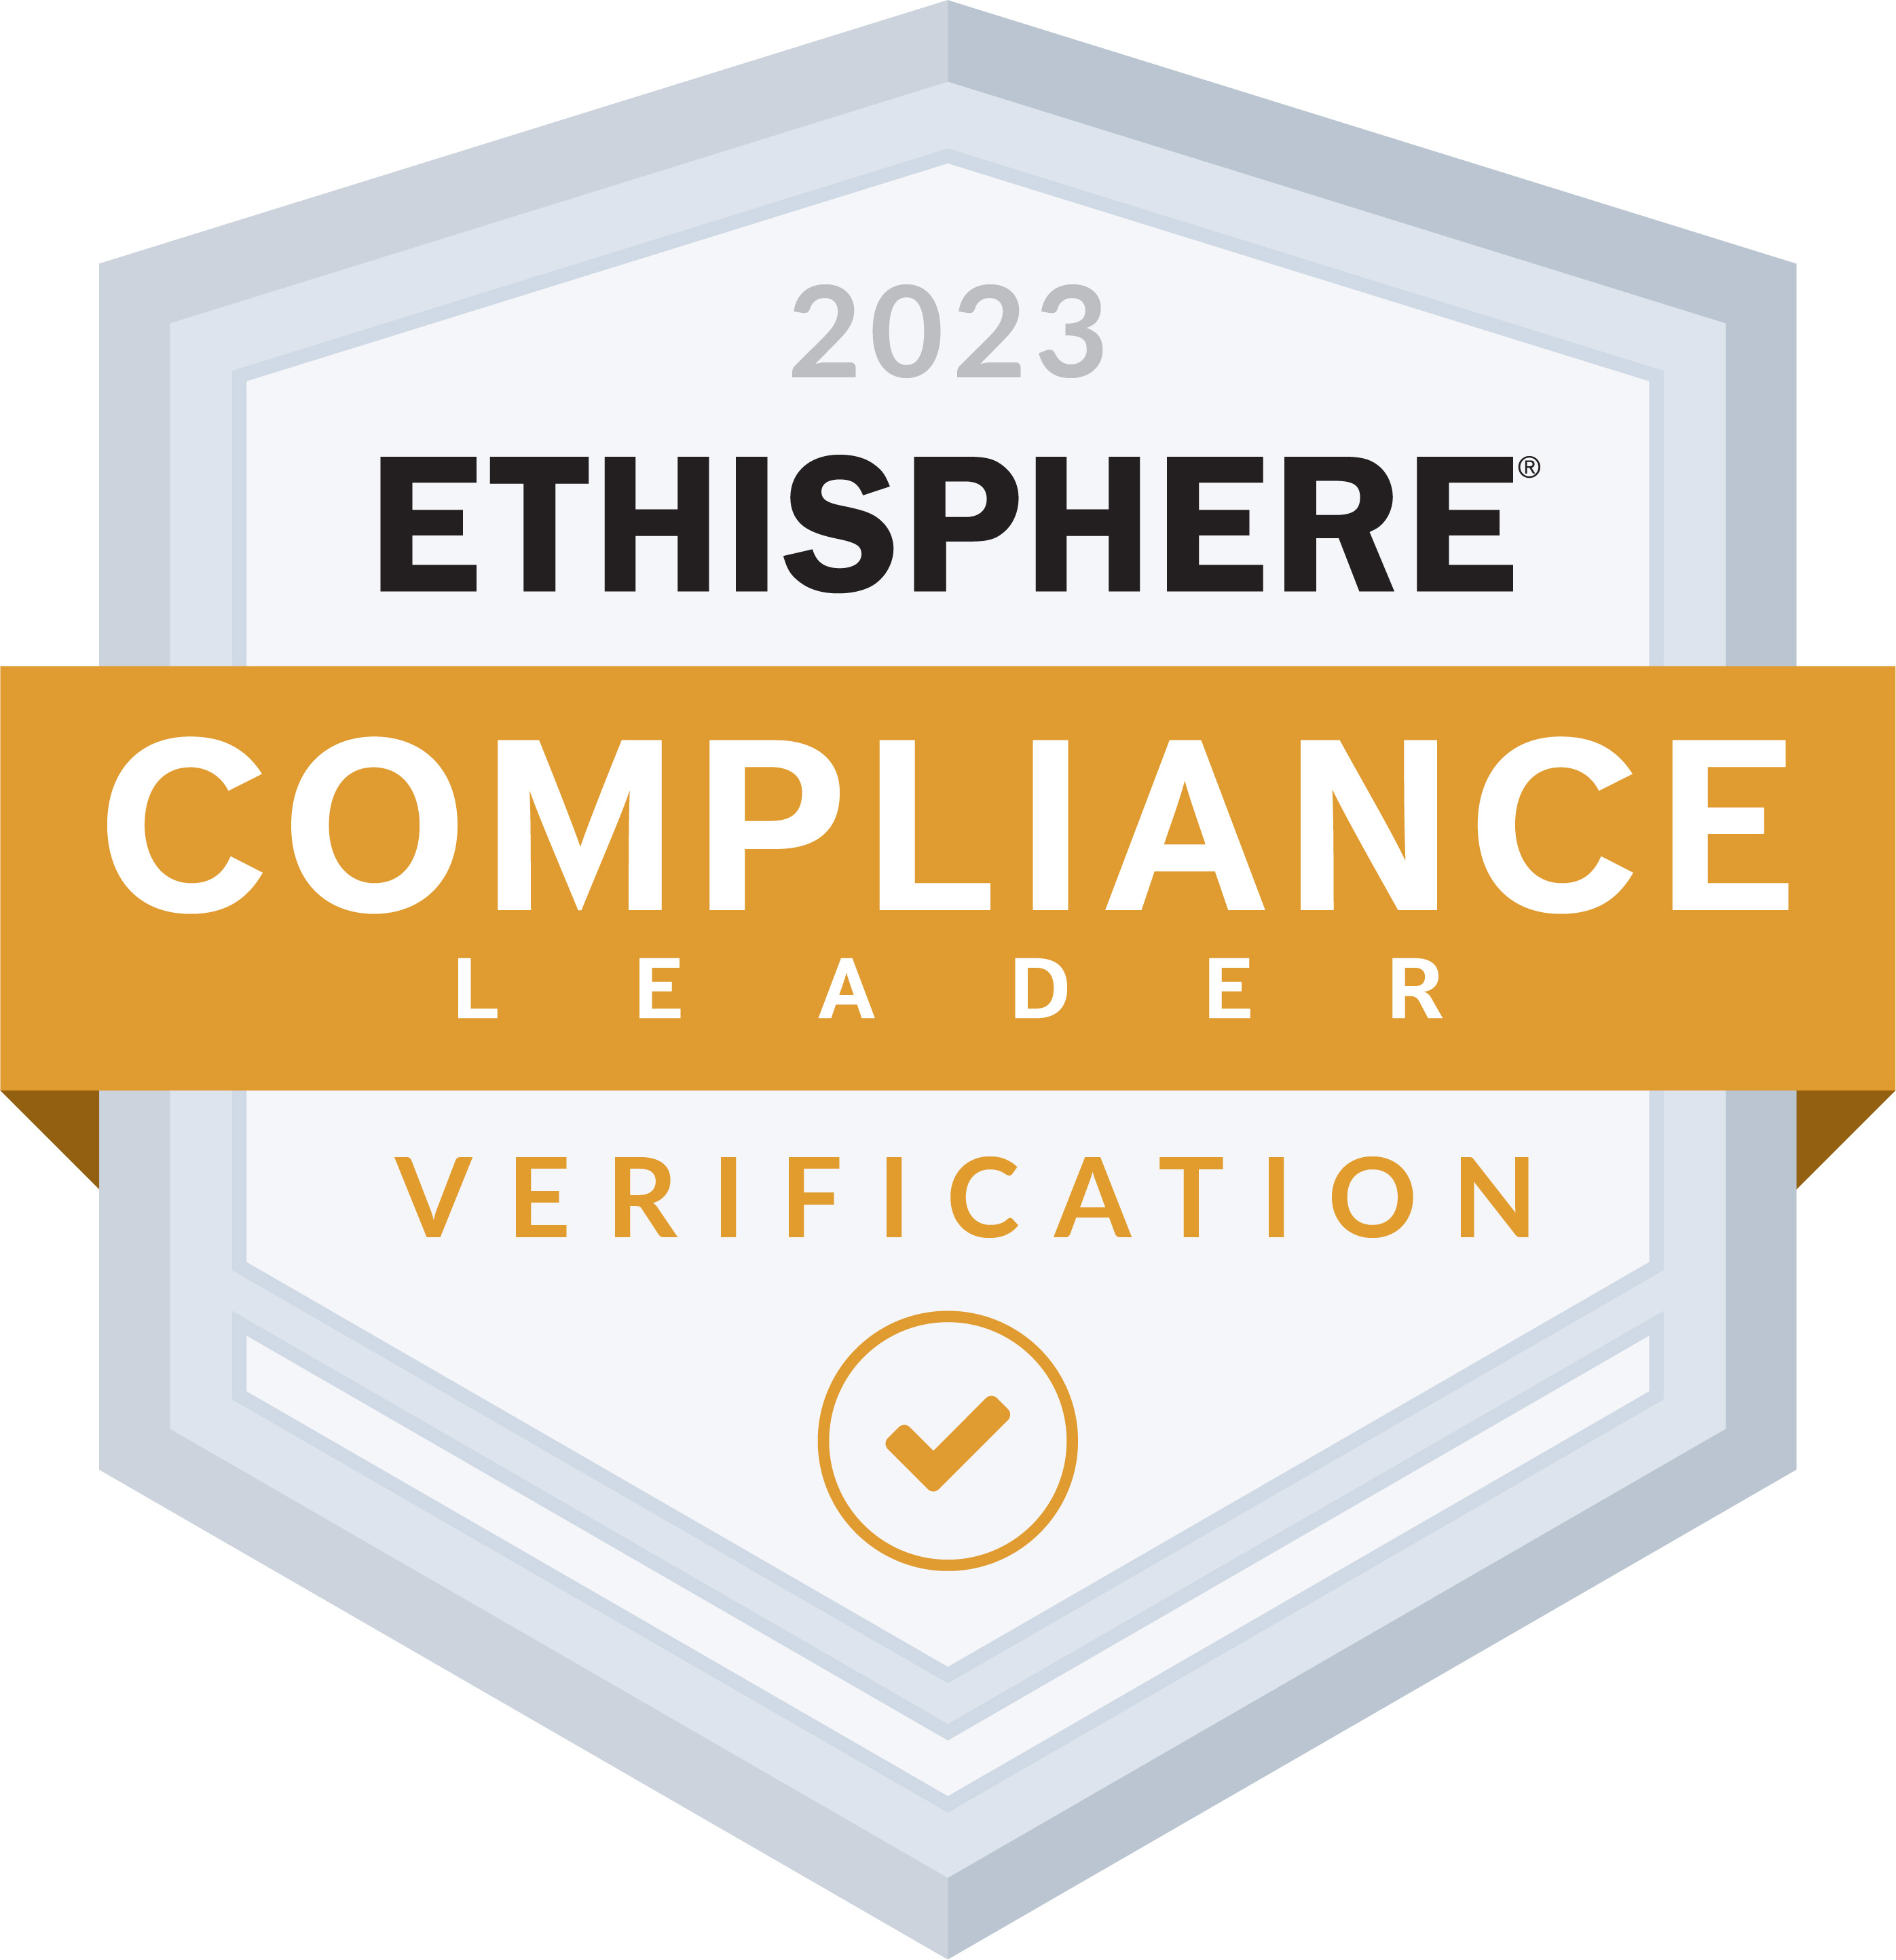 Astellas awarded Compliance Leader Verification